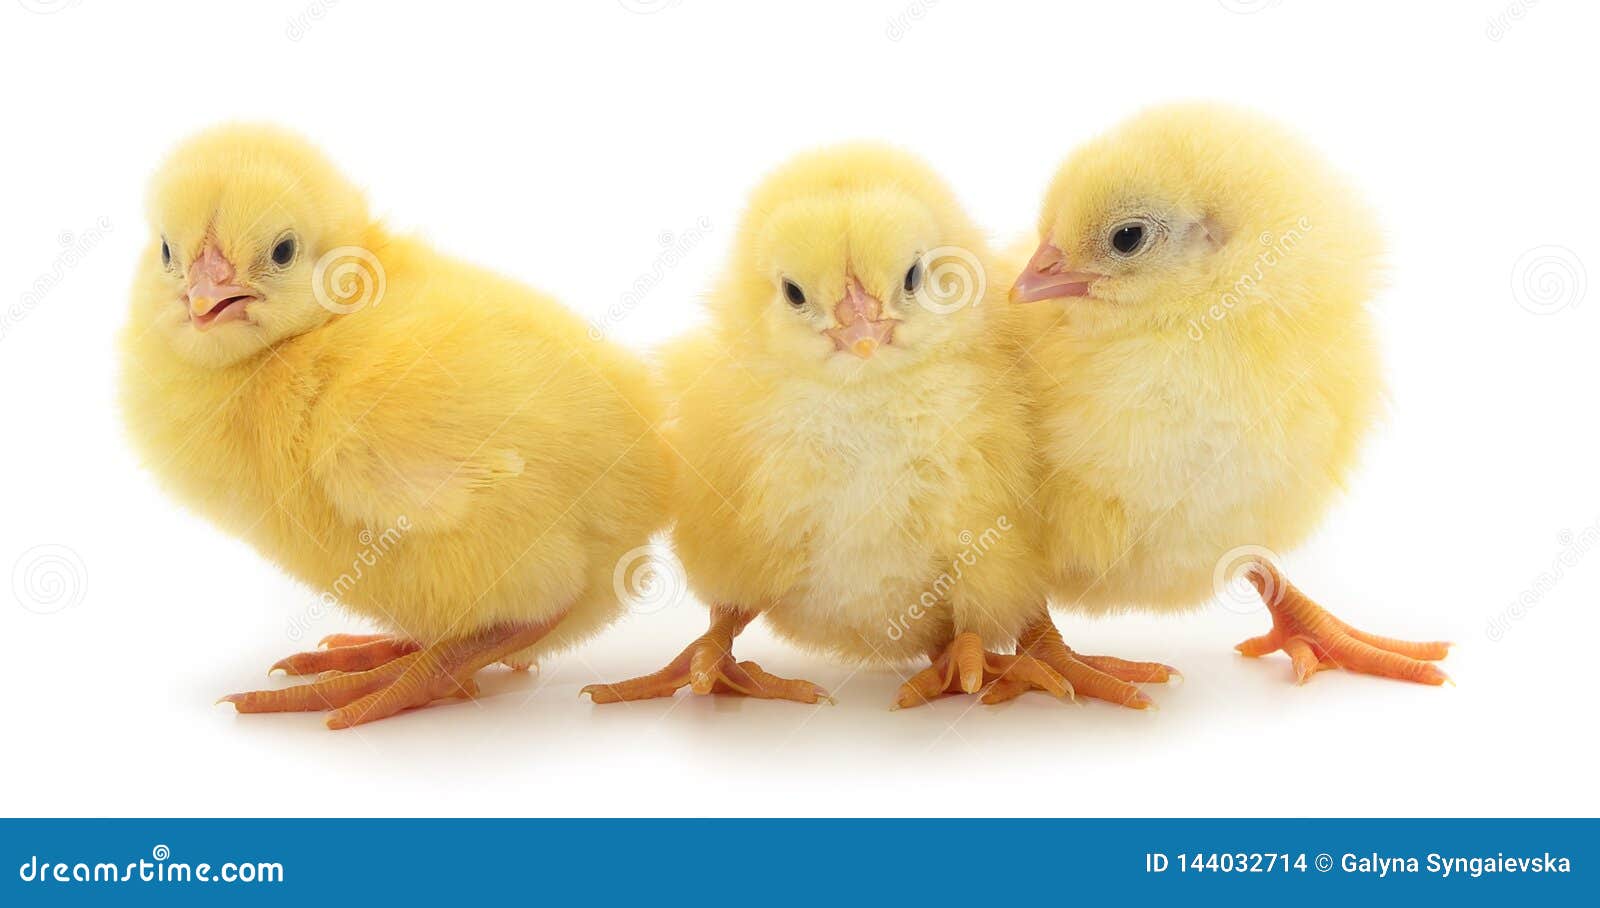 Маленькие цыпочки. Цыпленок желтого цвета. Желтый цыпленок на белом фоне. Куры Брама цыплята фото. Бройлер жужалари.